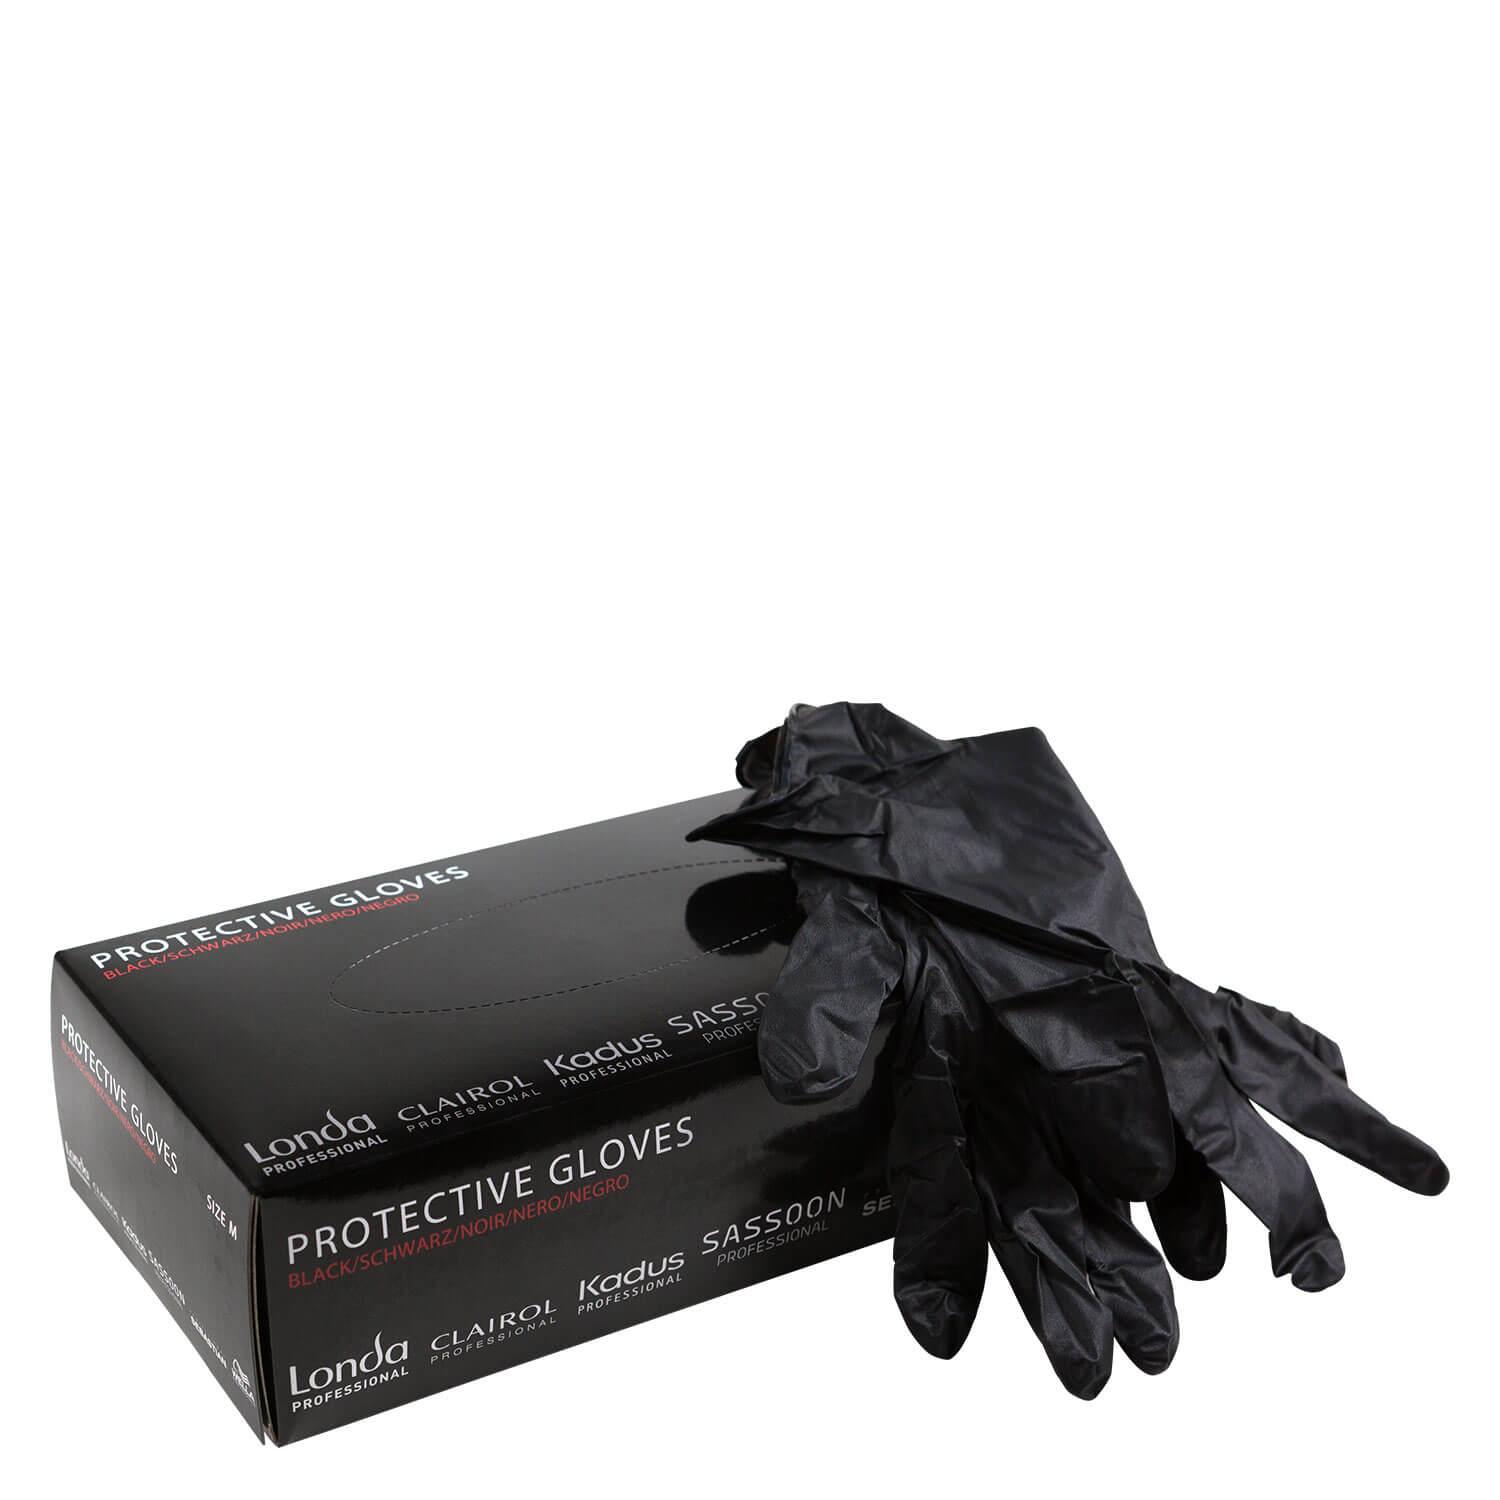 Wella Tools - Vinyl Protective Gloves Black